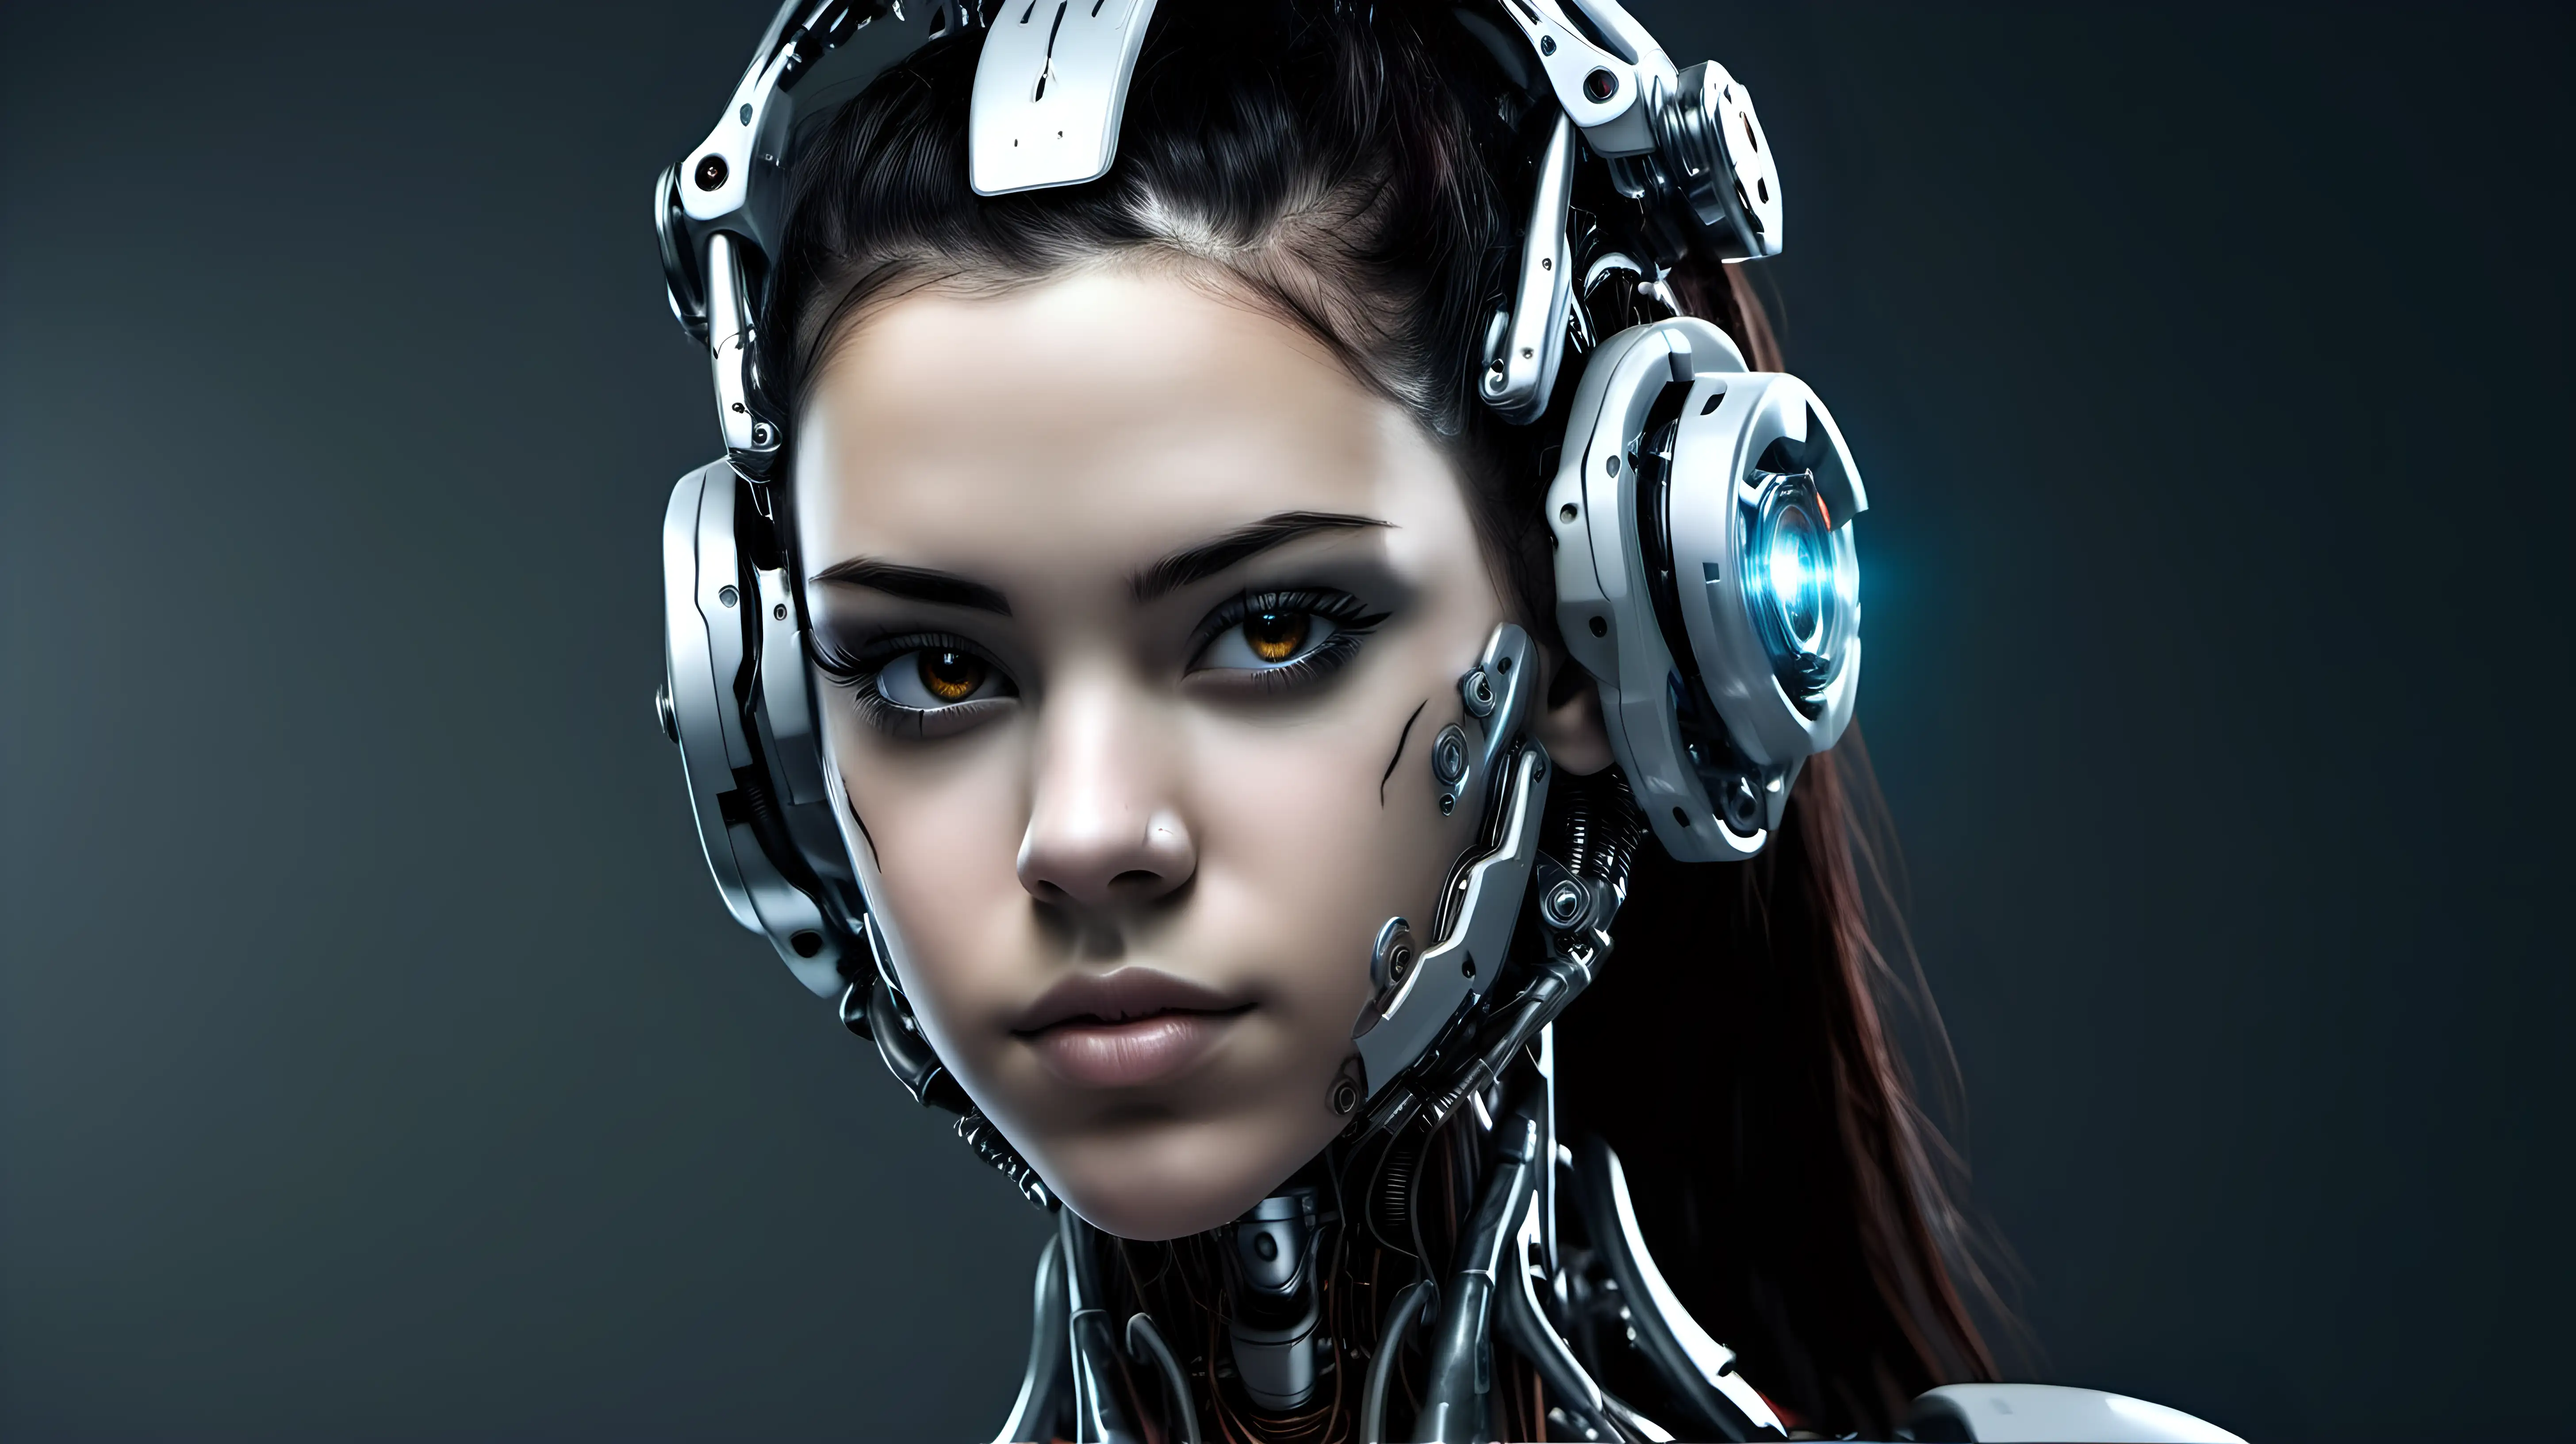 Beautiful Cyborg Woman with Dark Hair Futuristic Elegance in Cybernetic Beauty